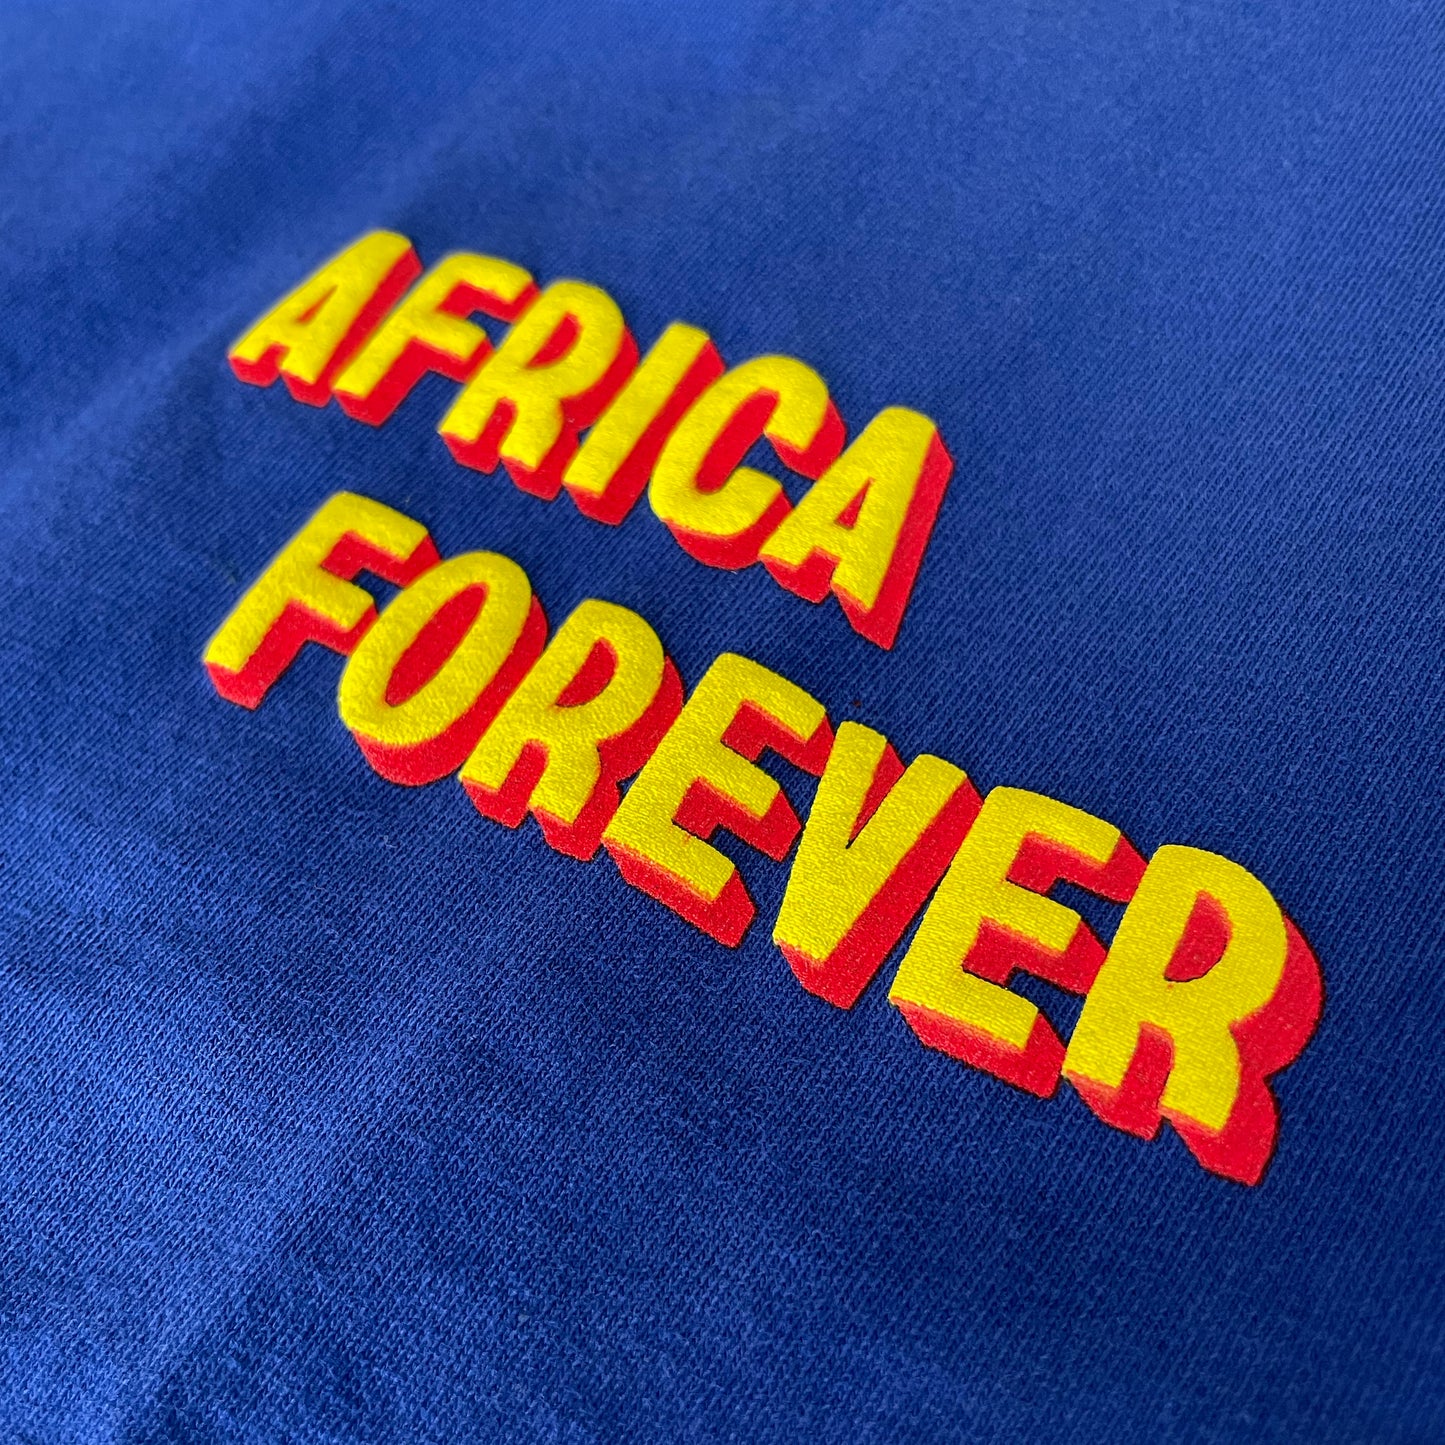 Africa Forever Tee - Cobalt